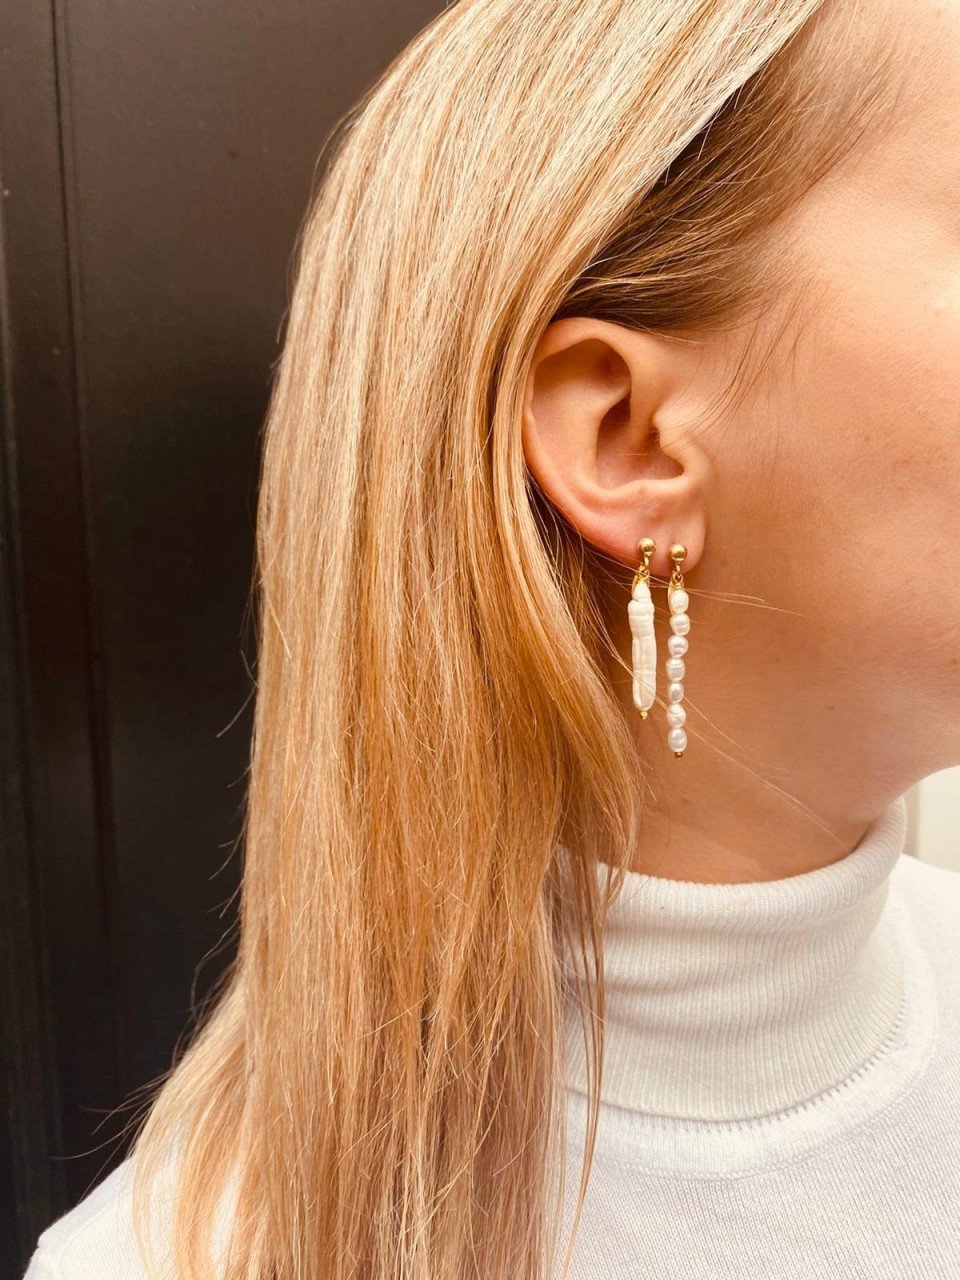 Pearl earrings vertical bar ovoid